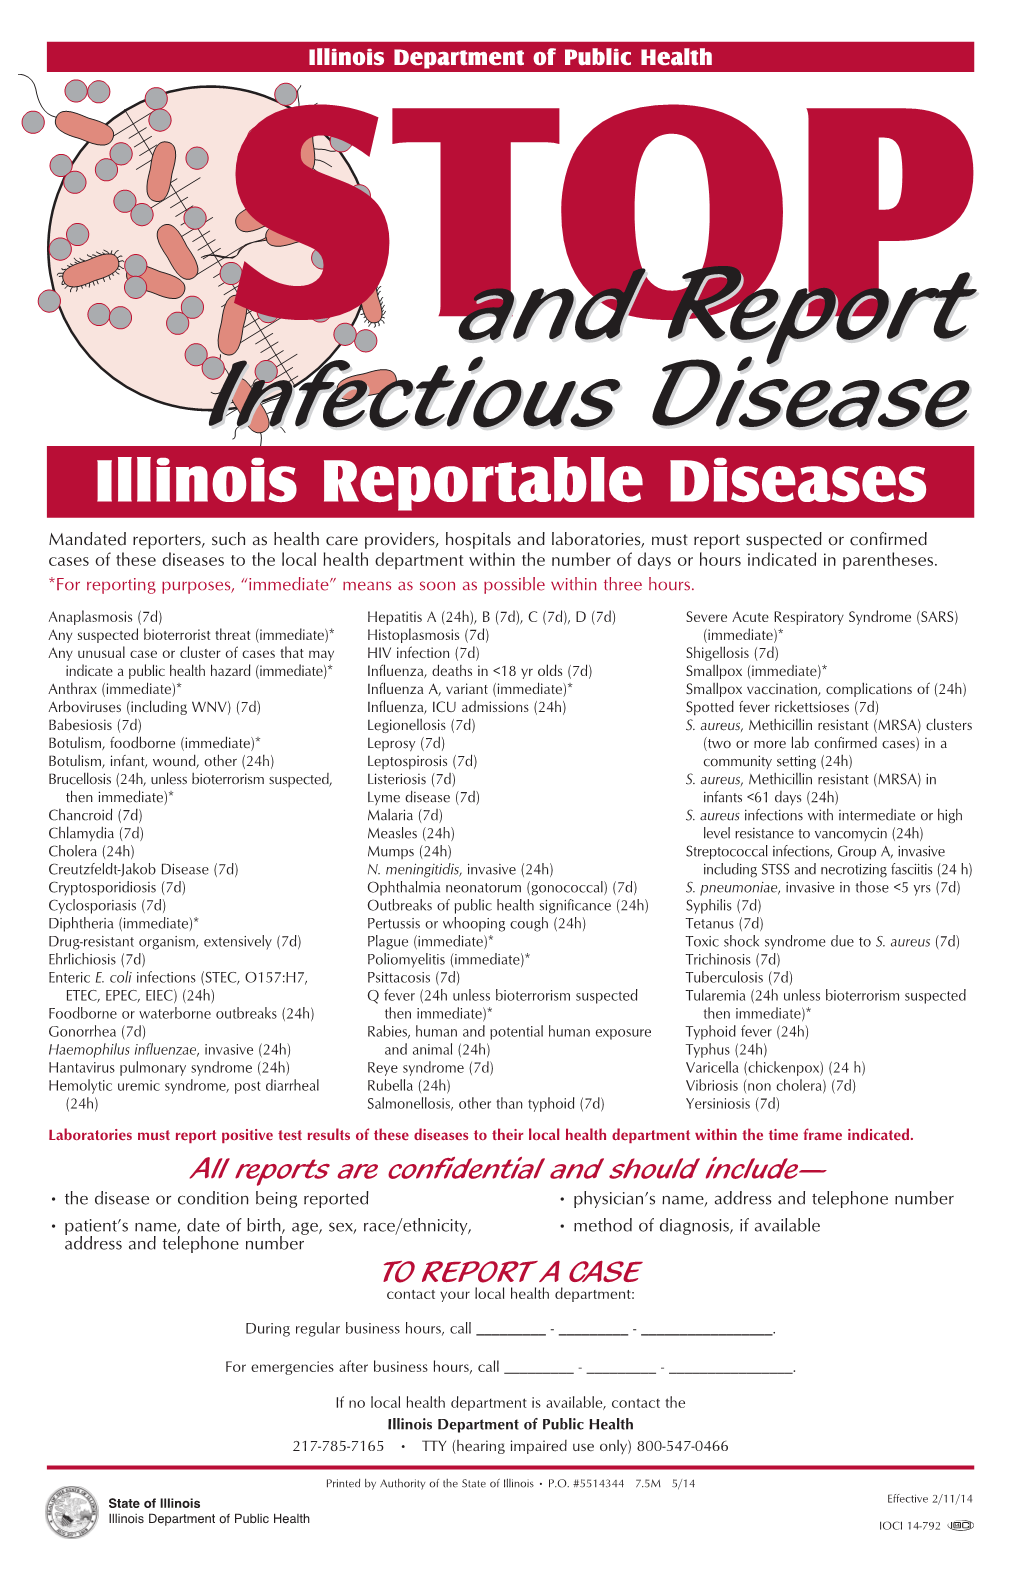 Illinois Reportable Diseases